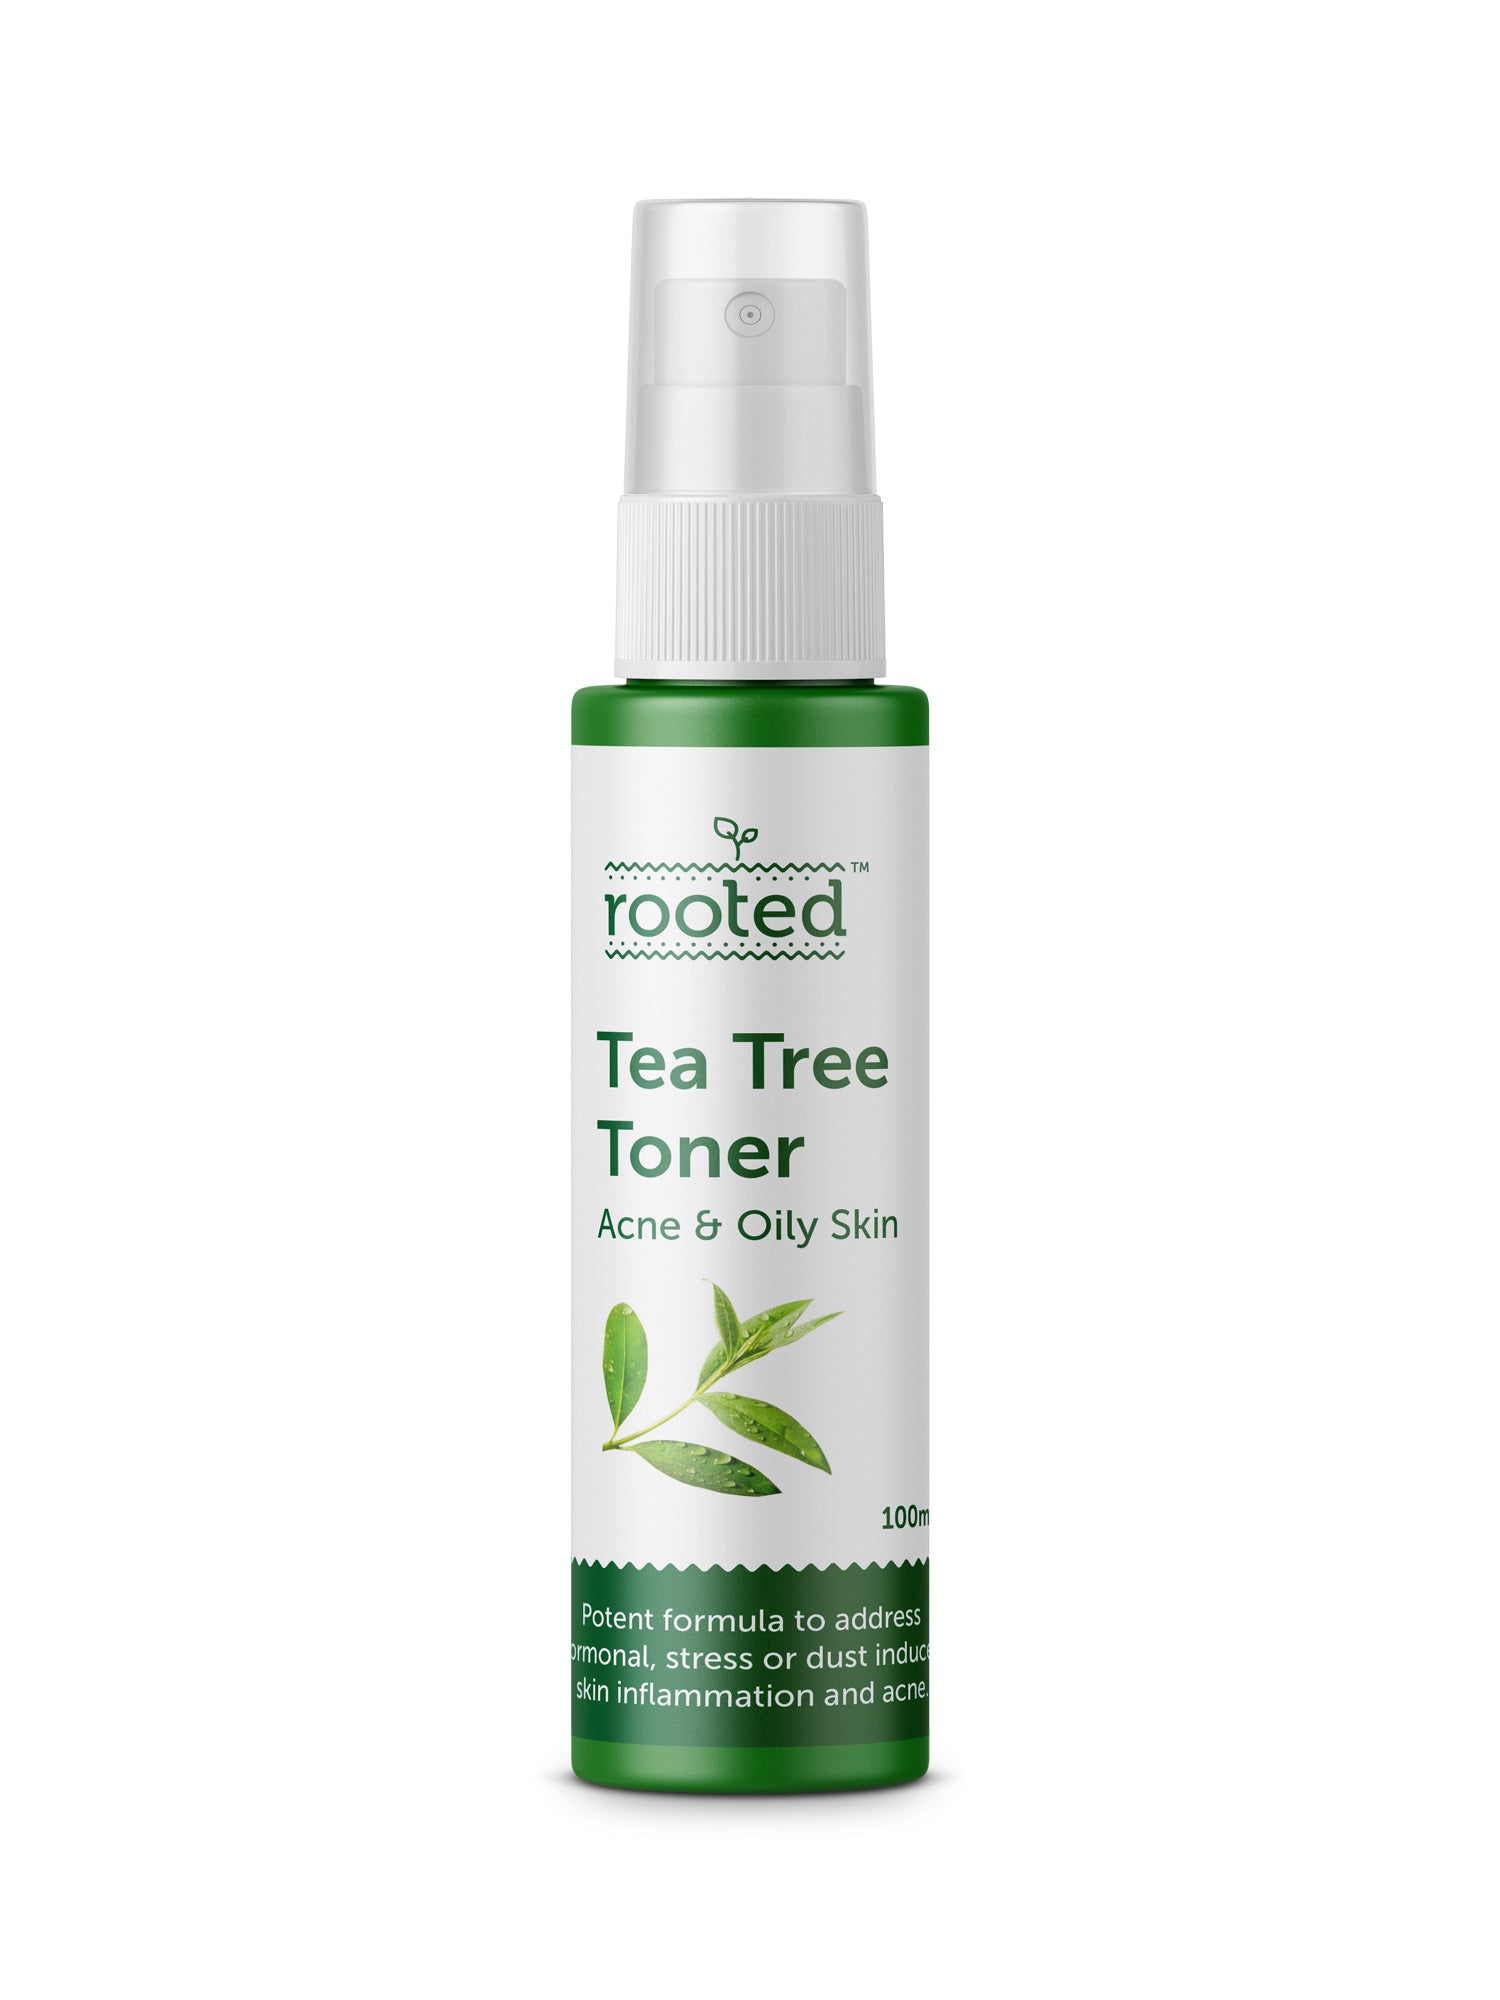 Tea Tree Toner - Banishing Acne & Oily Skin Everyday! - Rooted Store